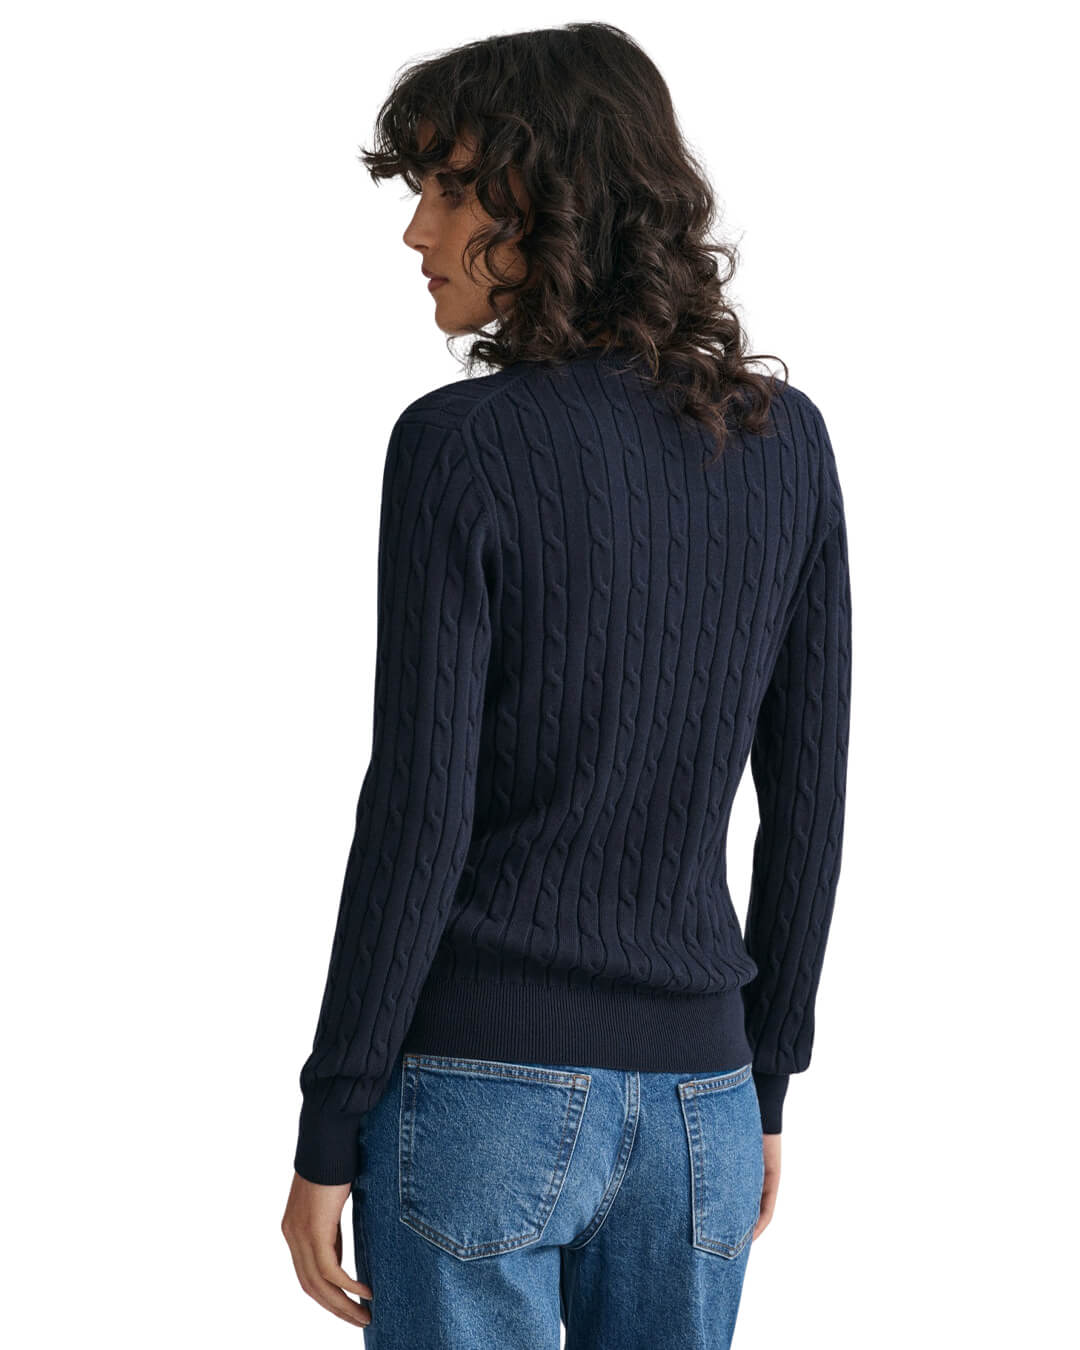 Gant Jumpers Gant Evening Blue Stretch Cotton Cable Knit V-Neck Sweater